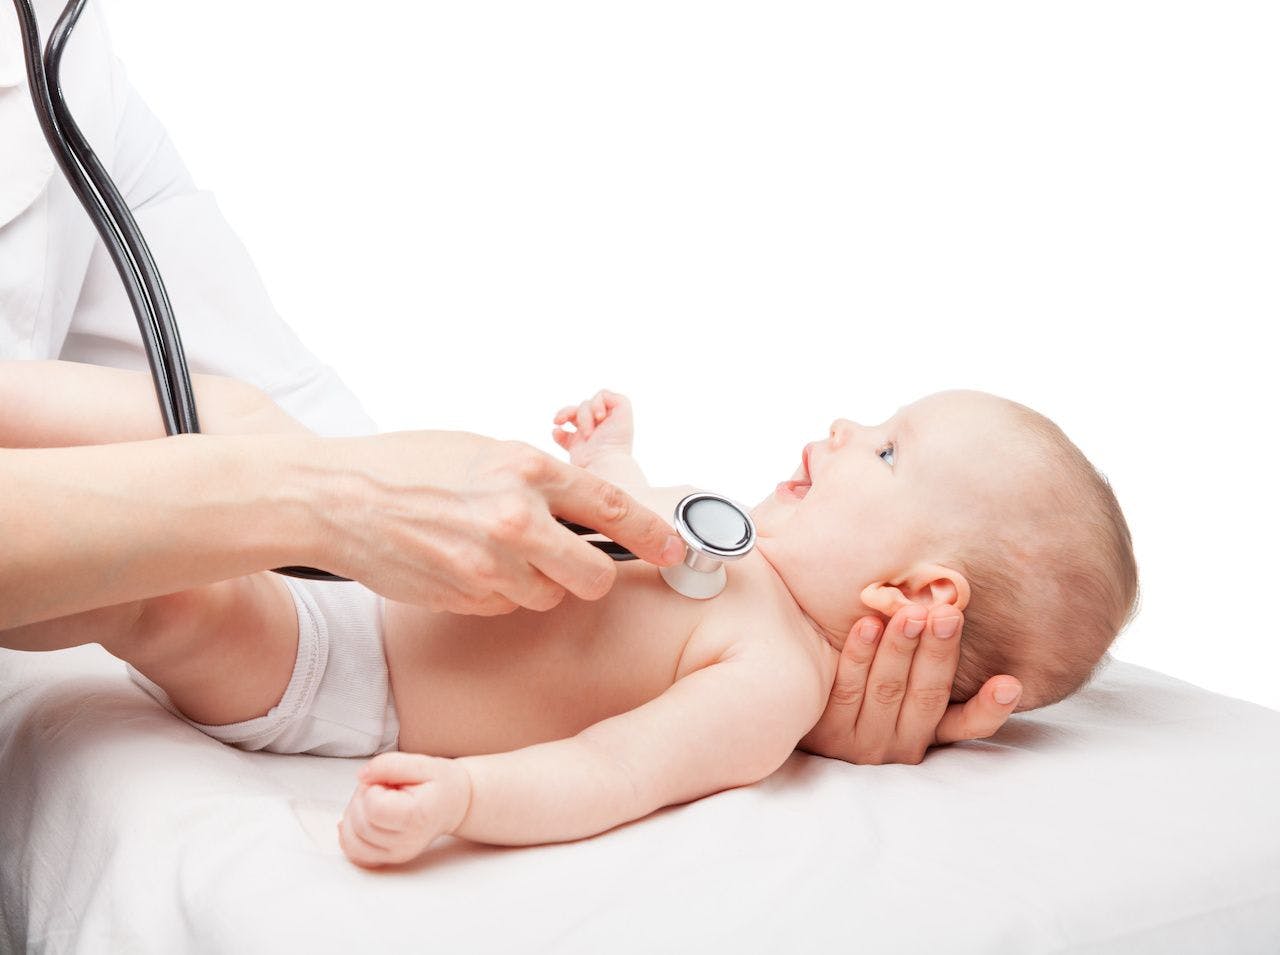 Baby medical exam: © Dmitry Naumov - stock.adobe.com